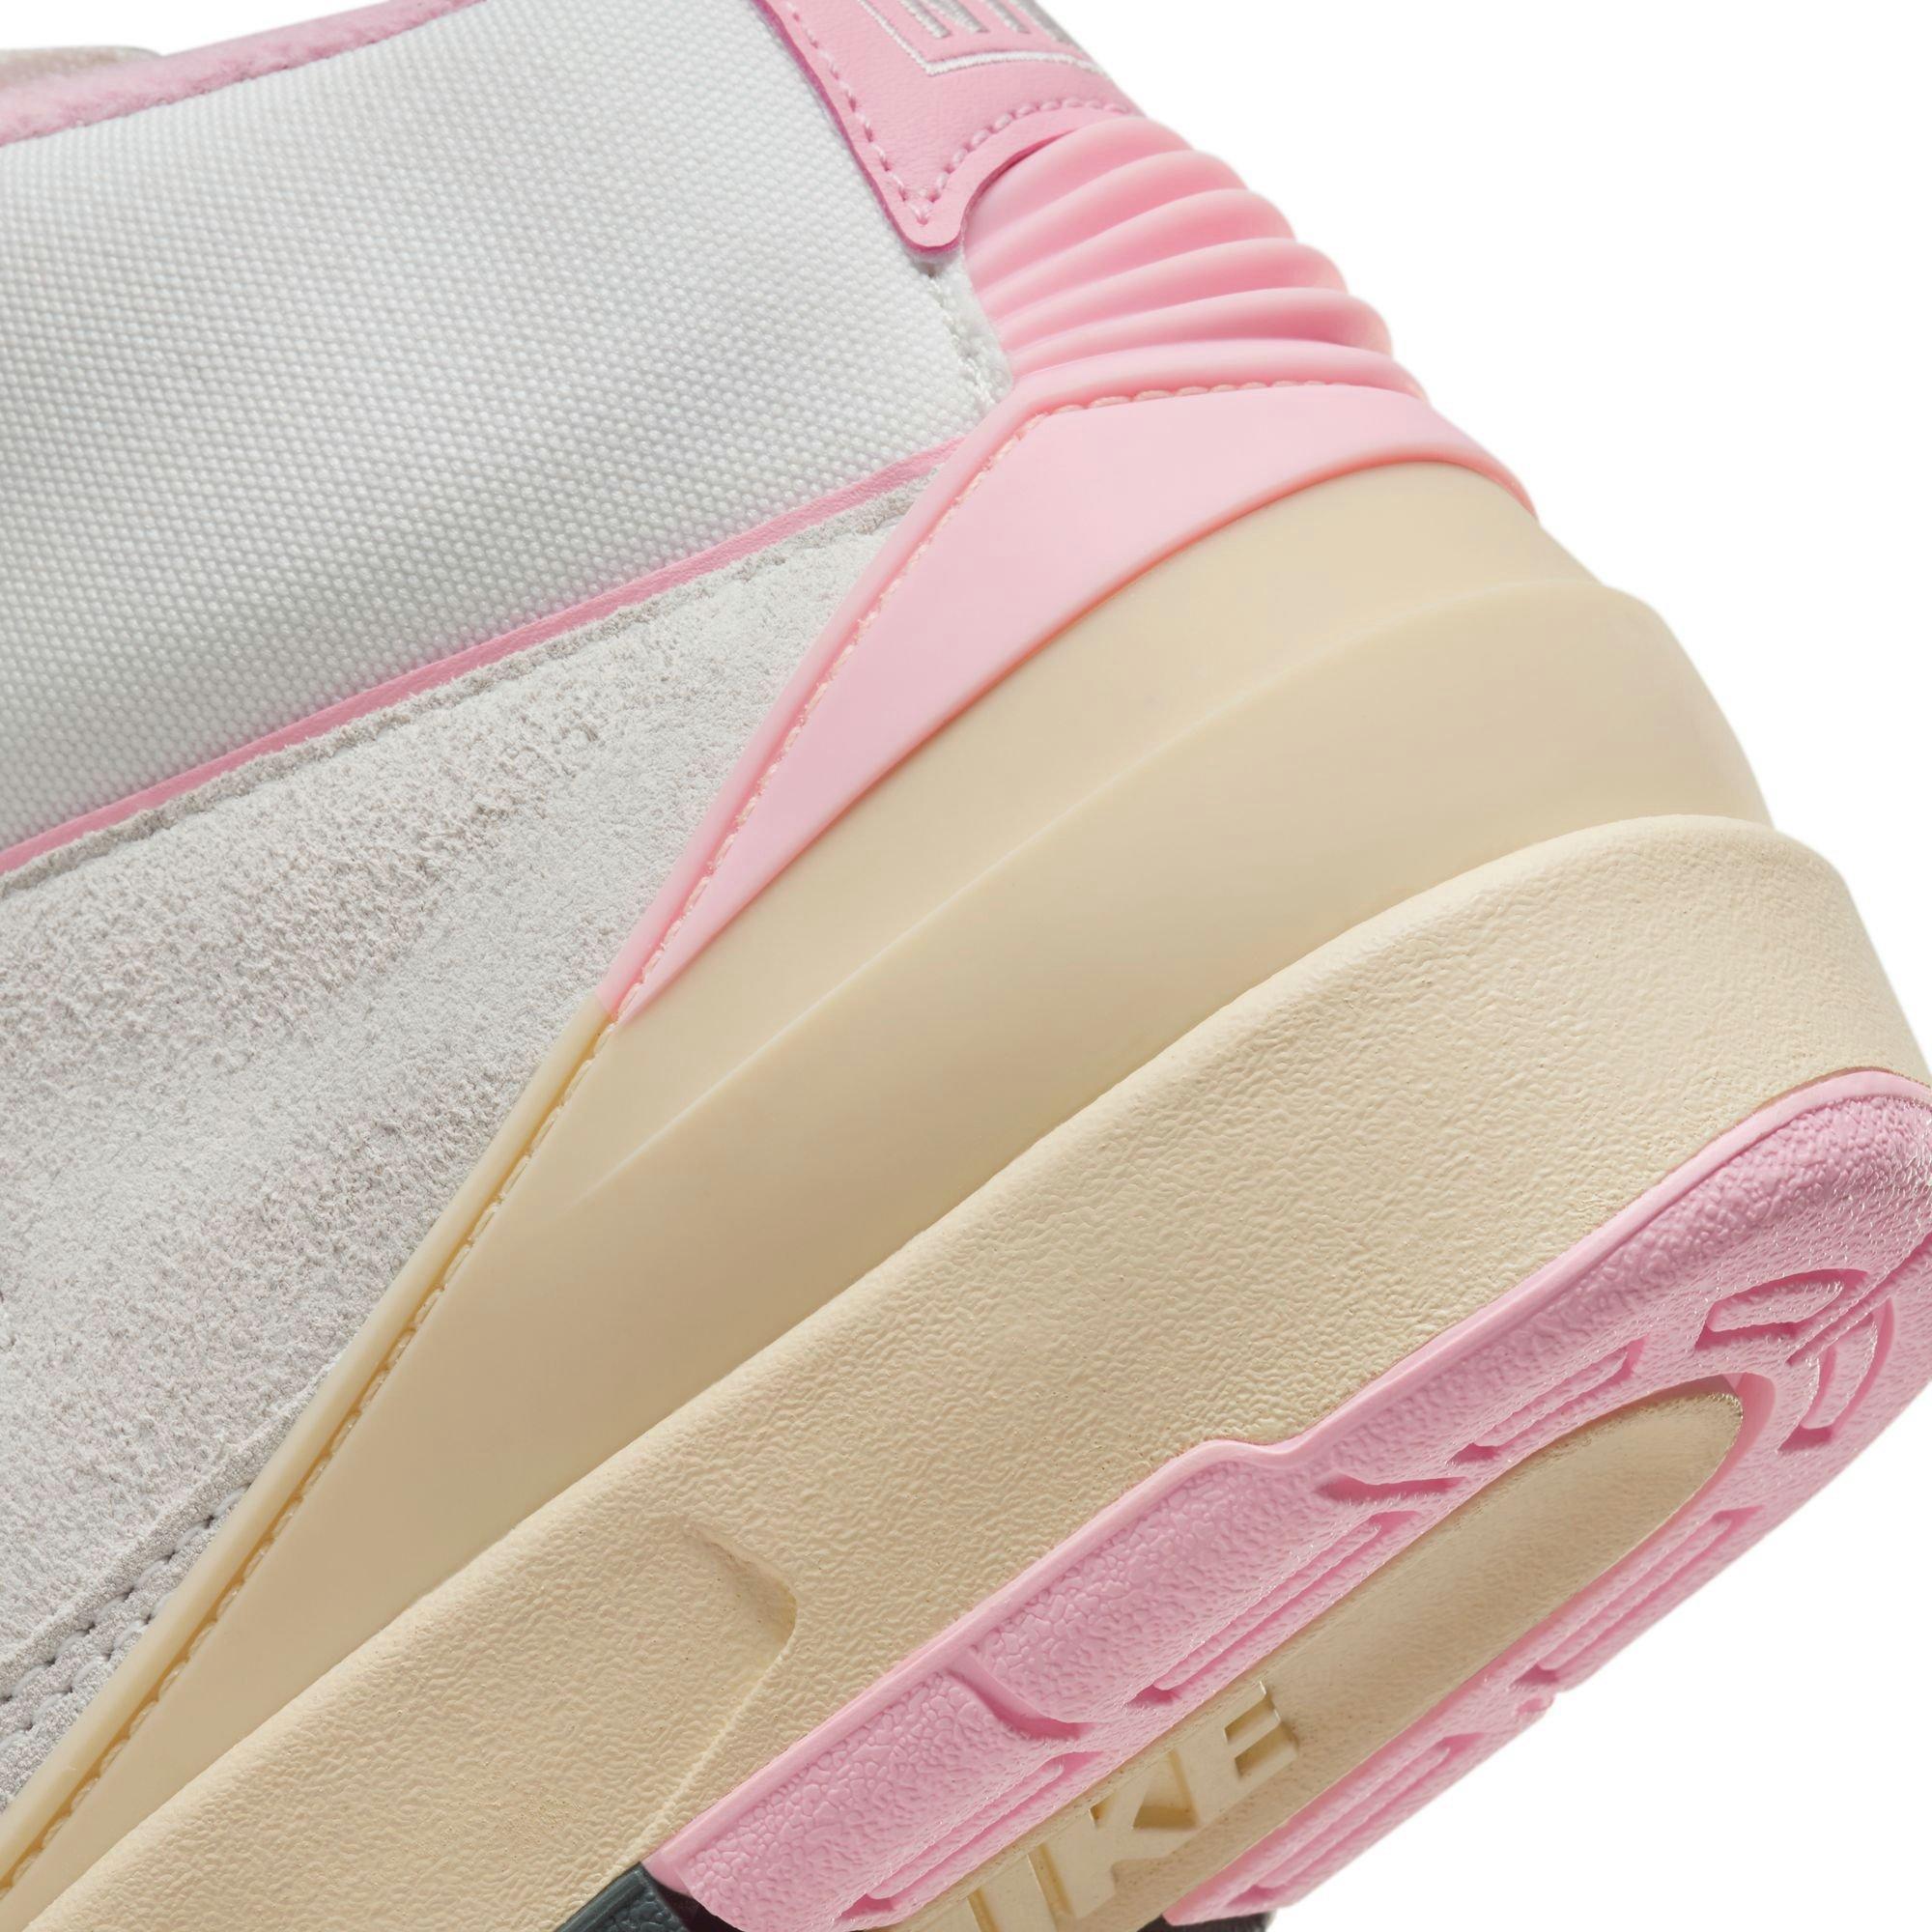 Shoe Dripping Shirt to Match Jordan 2 Soft Pink, Retro 2 Soft Pink